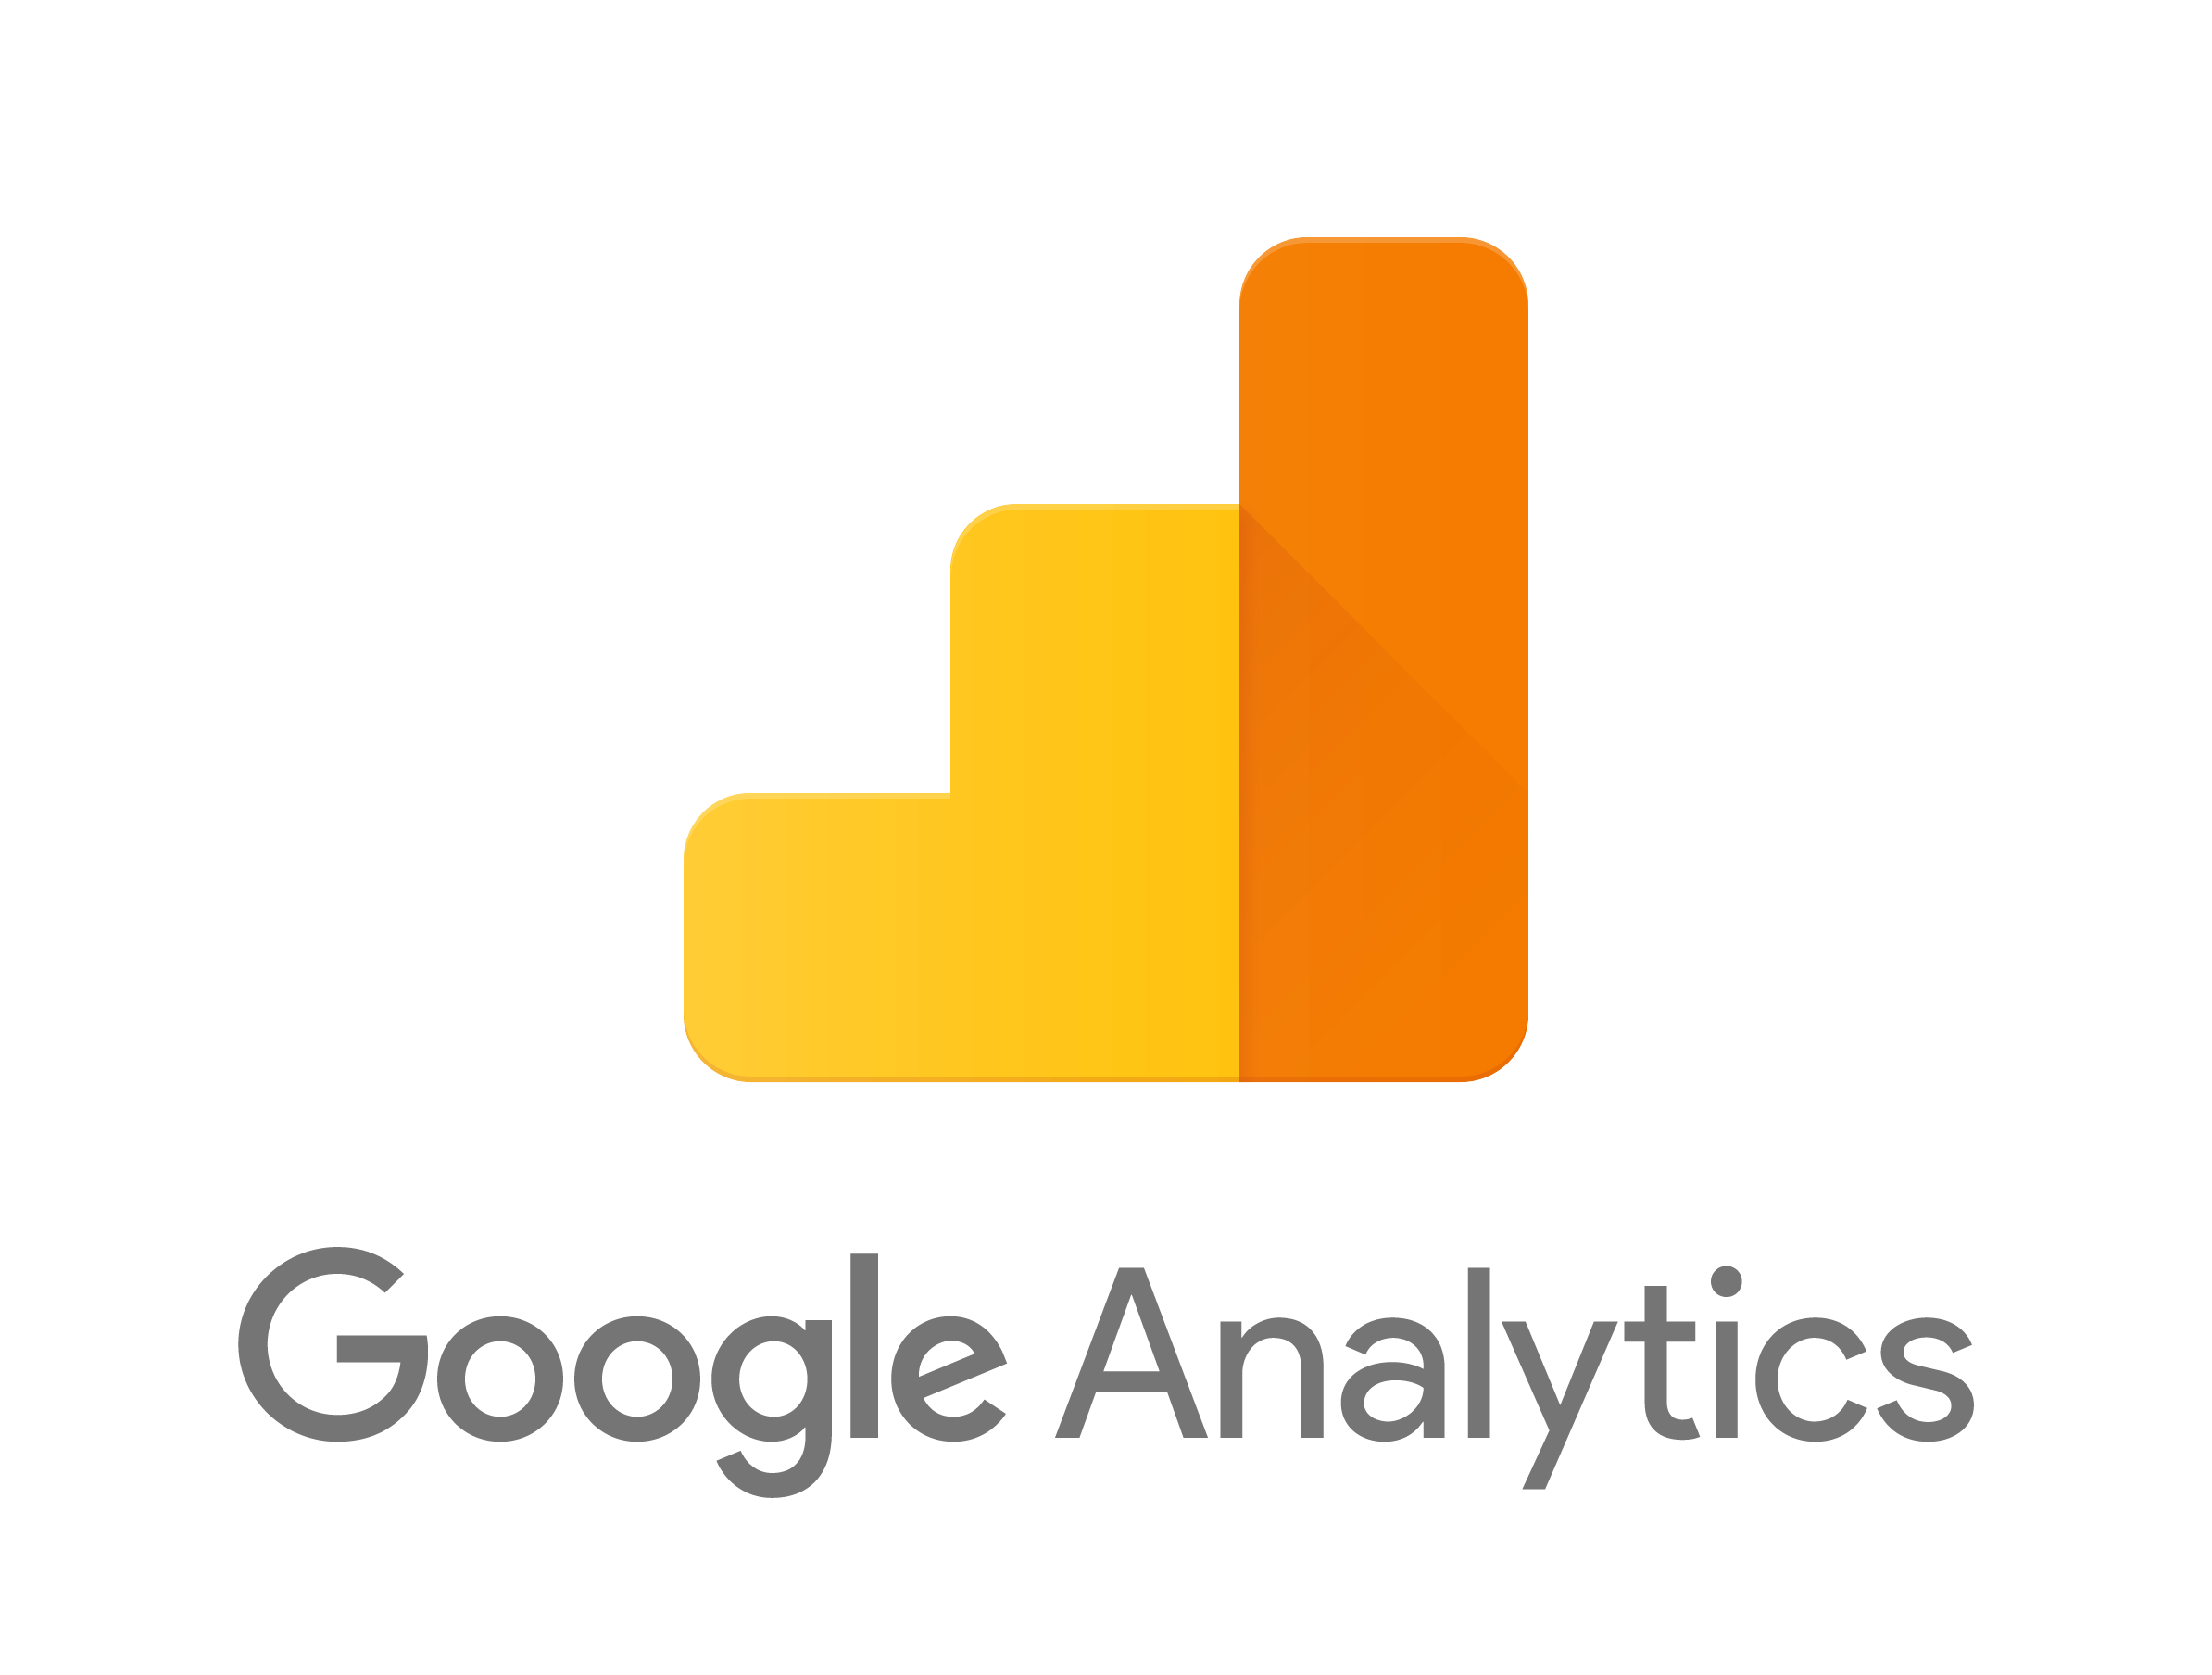 Can I Use Logo - Google Analytics Developer Branding Guidelines & Policies. Google